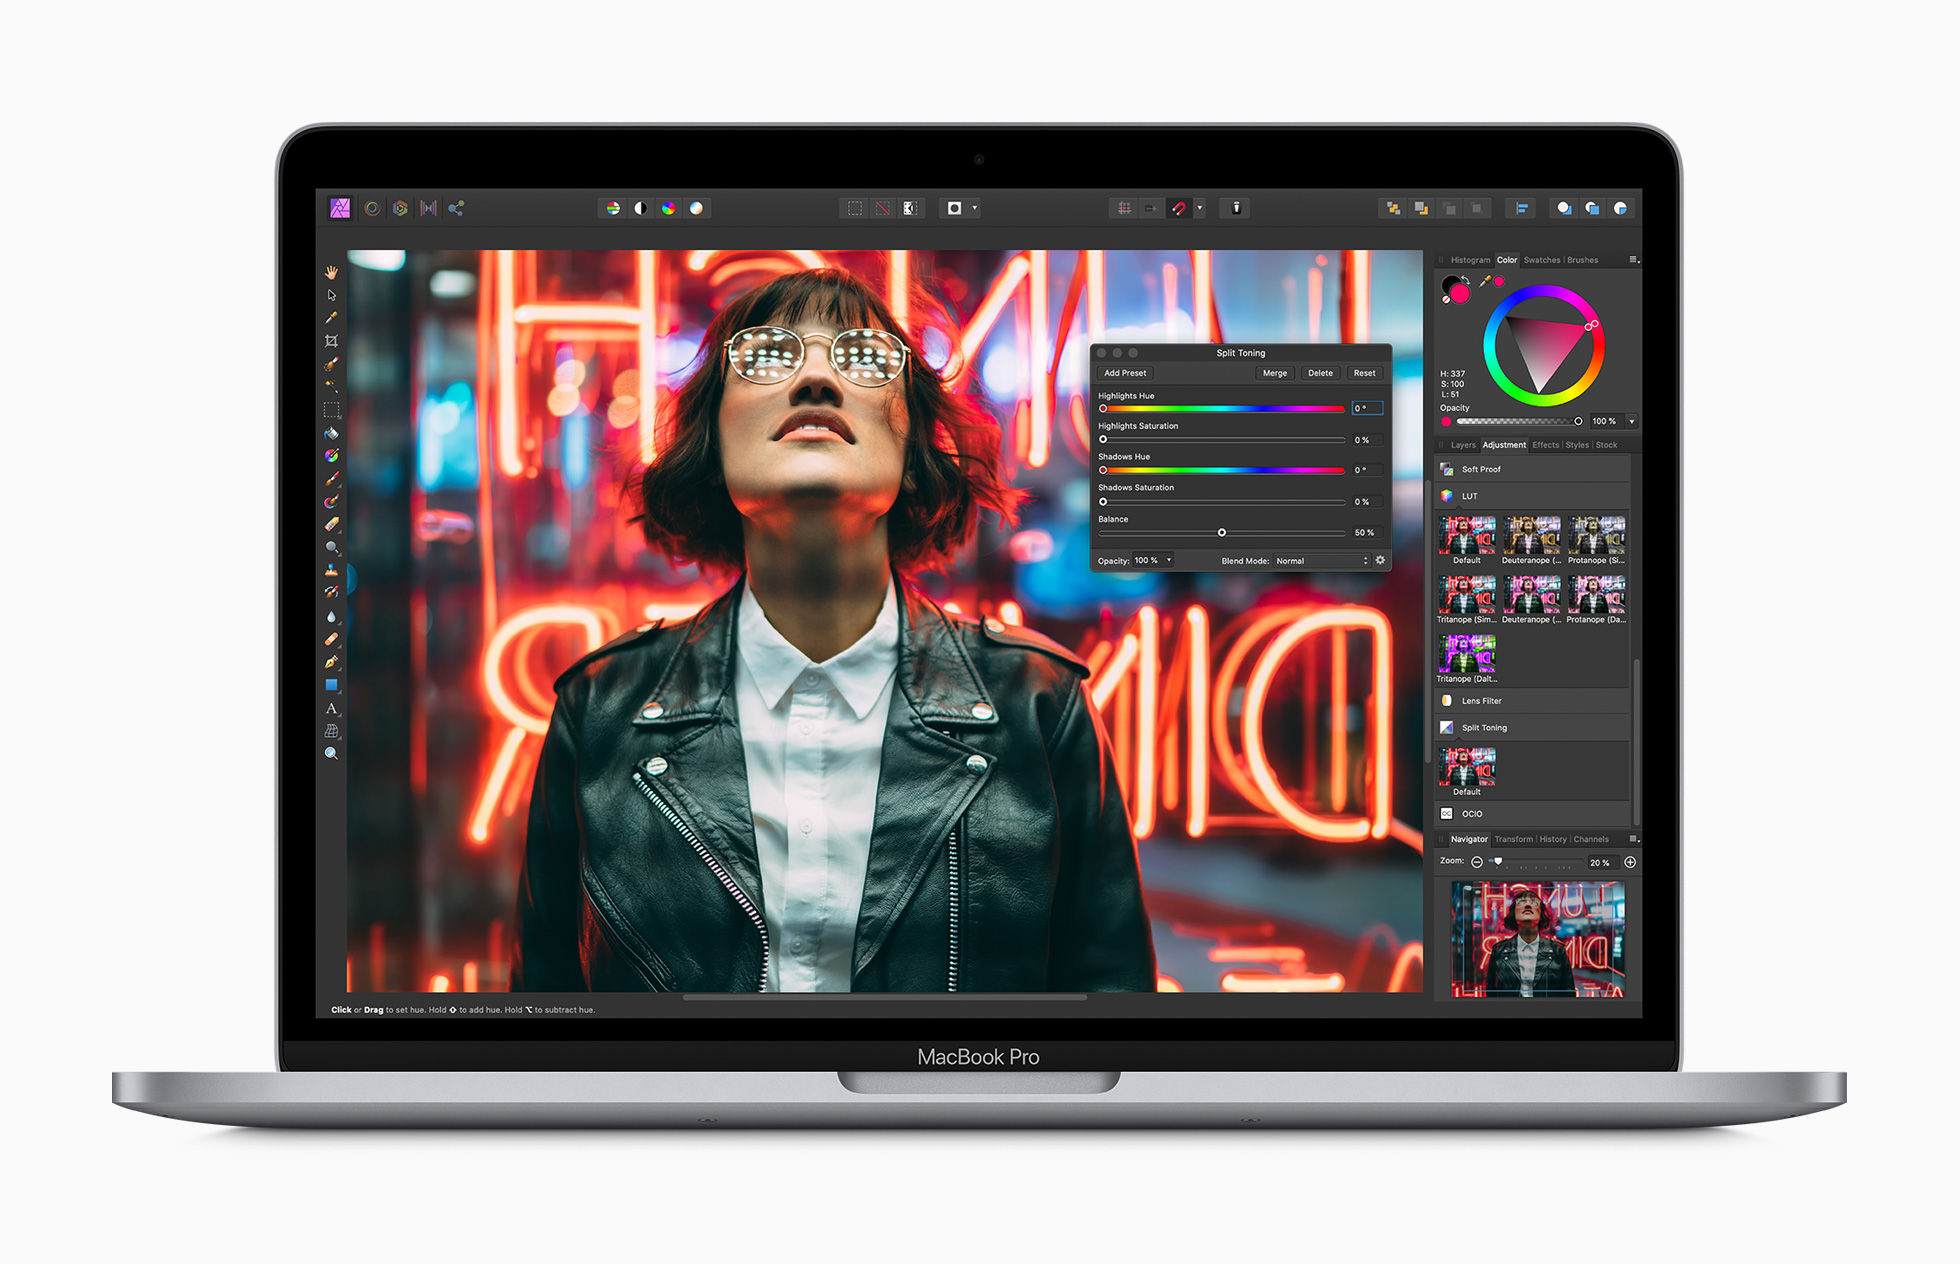 Apple_macbook_pro-13-inch-with-affinity-photo_screen_05042020_big.jpg.large_2x.jpg